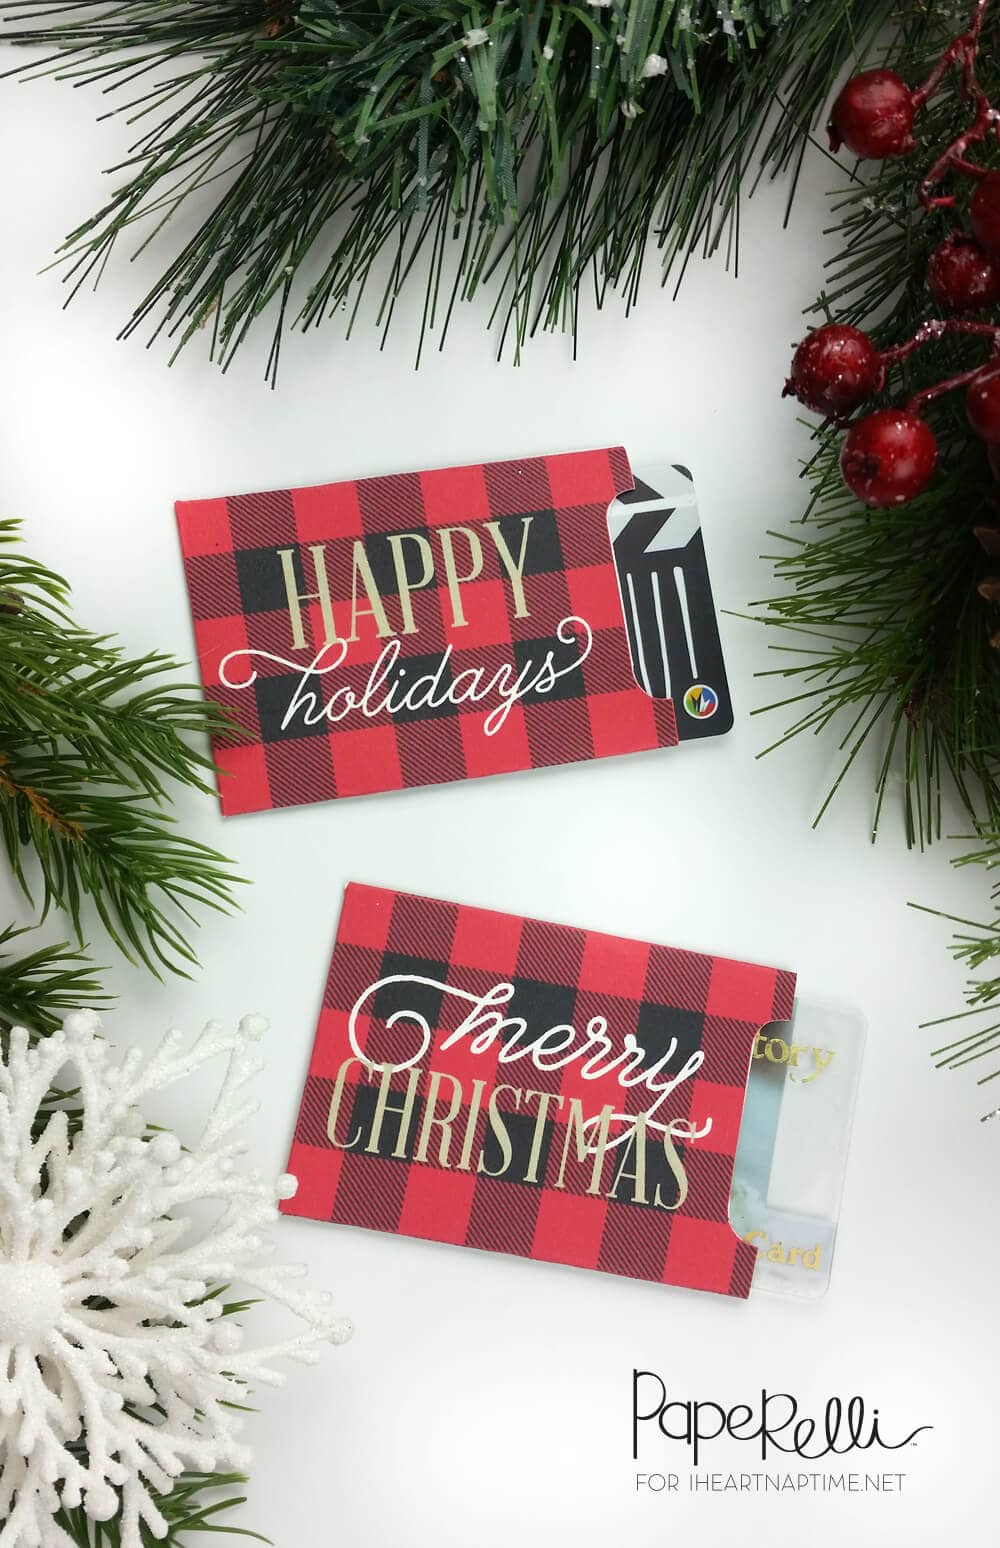 Plaid Christmas Gift Card Free Printable - perfect for holiday gift giving!